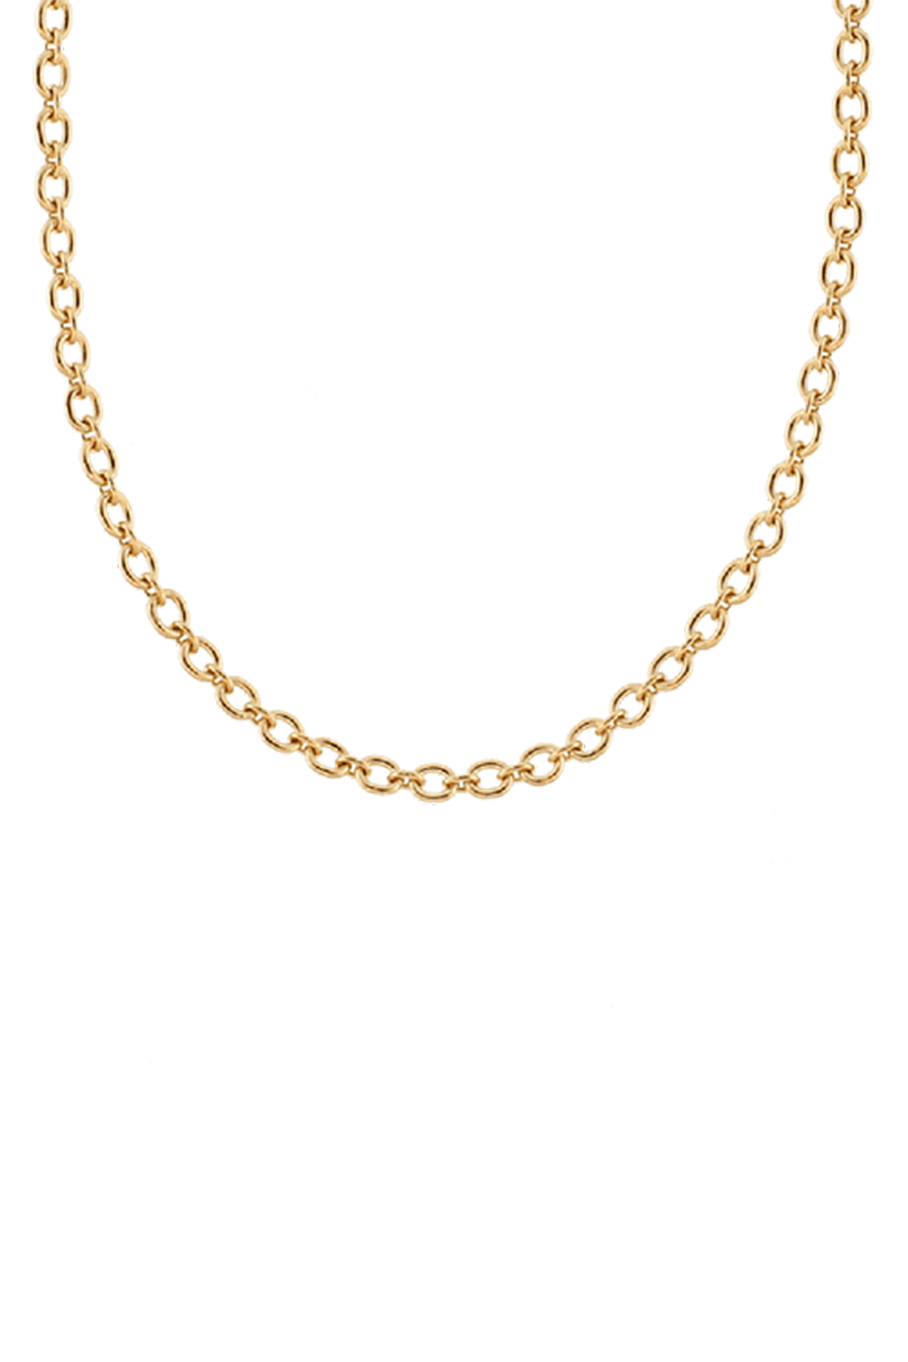 IRENE NEUWIRTH JEWELRY-Tiny Oval Link Chain Necklace-